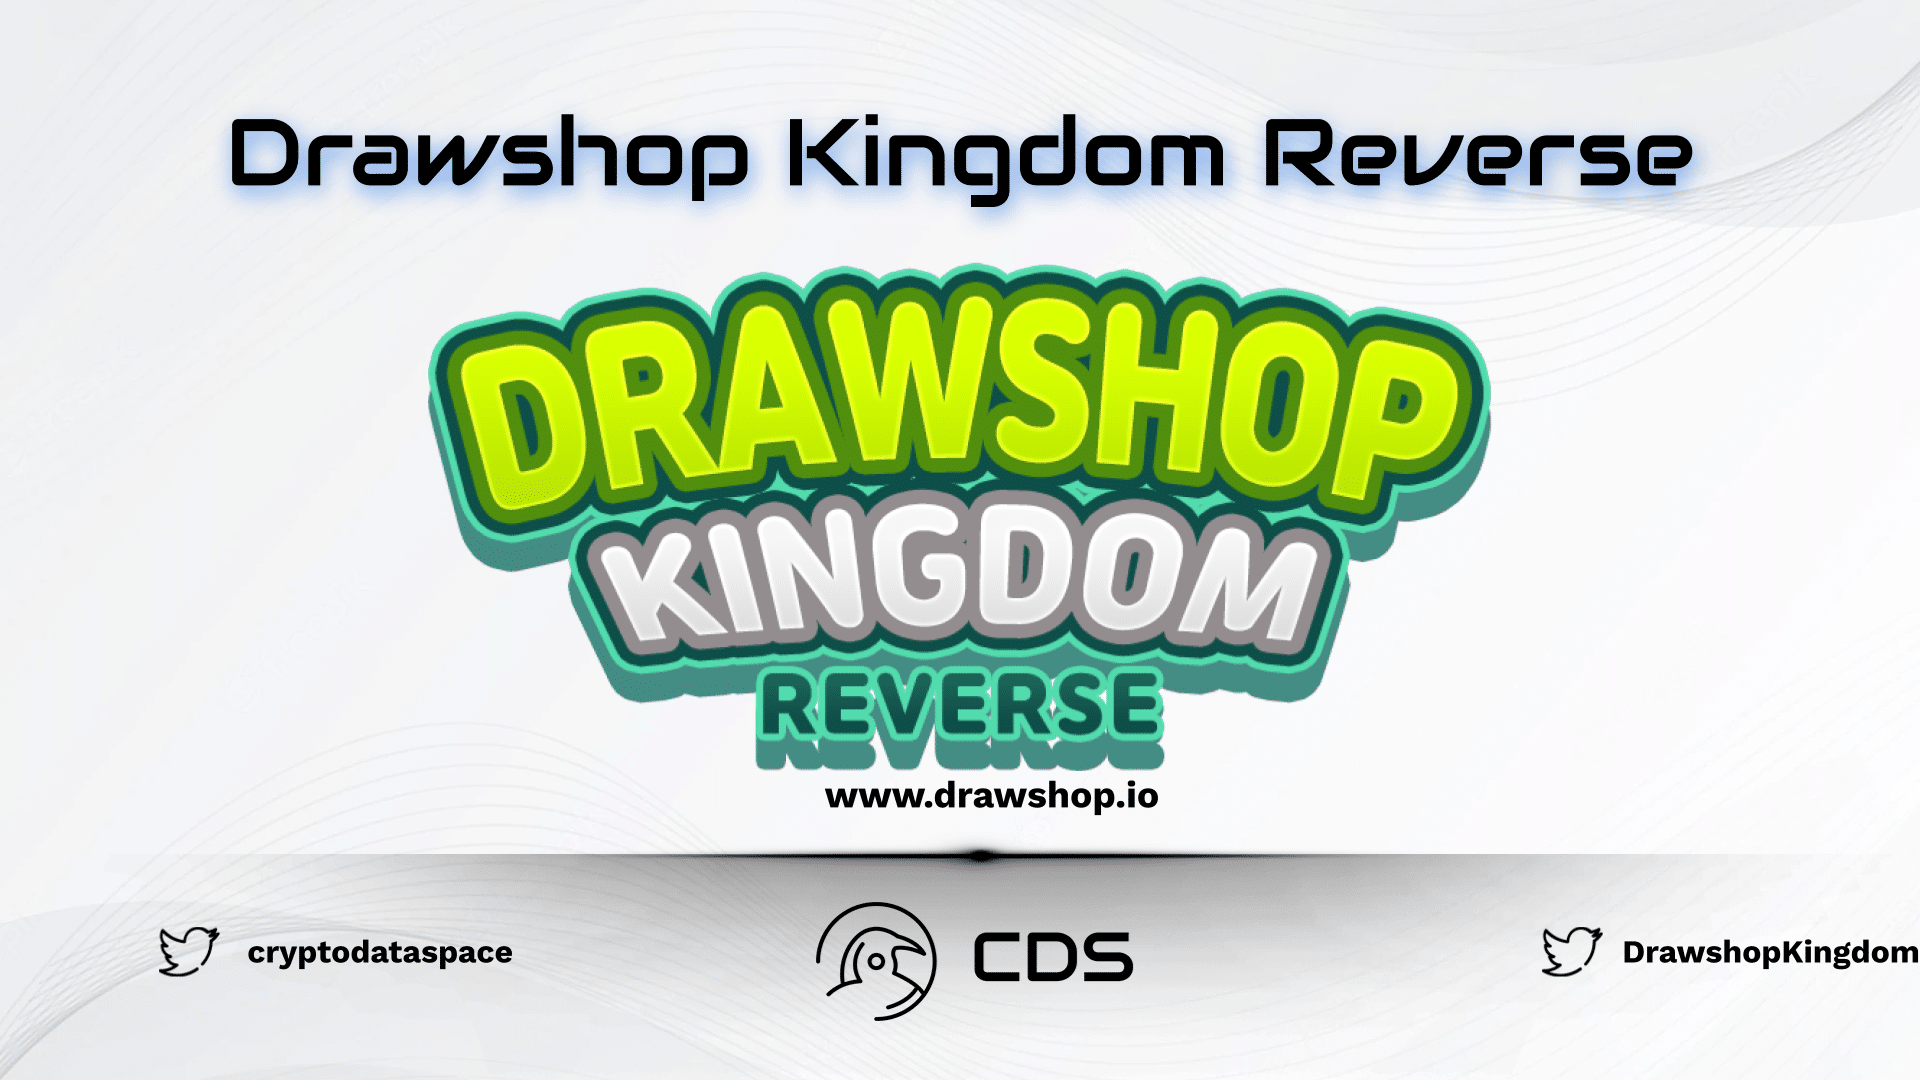 Drawshop Kingdom Reverse